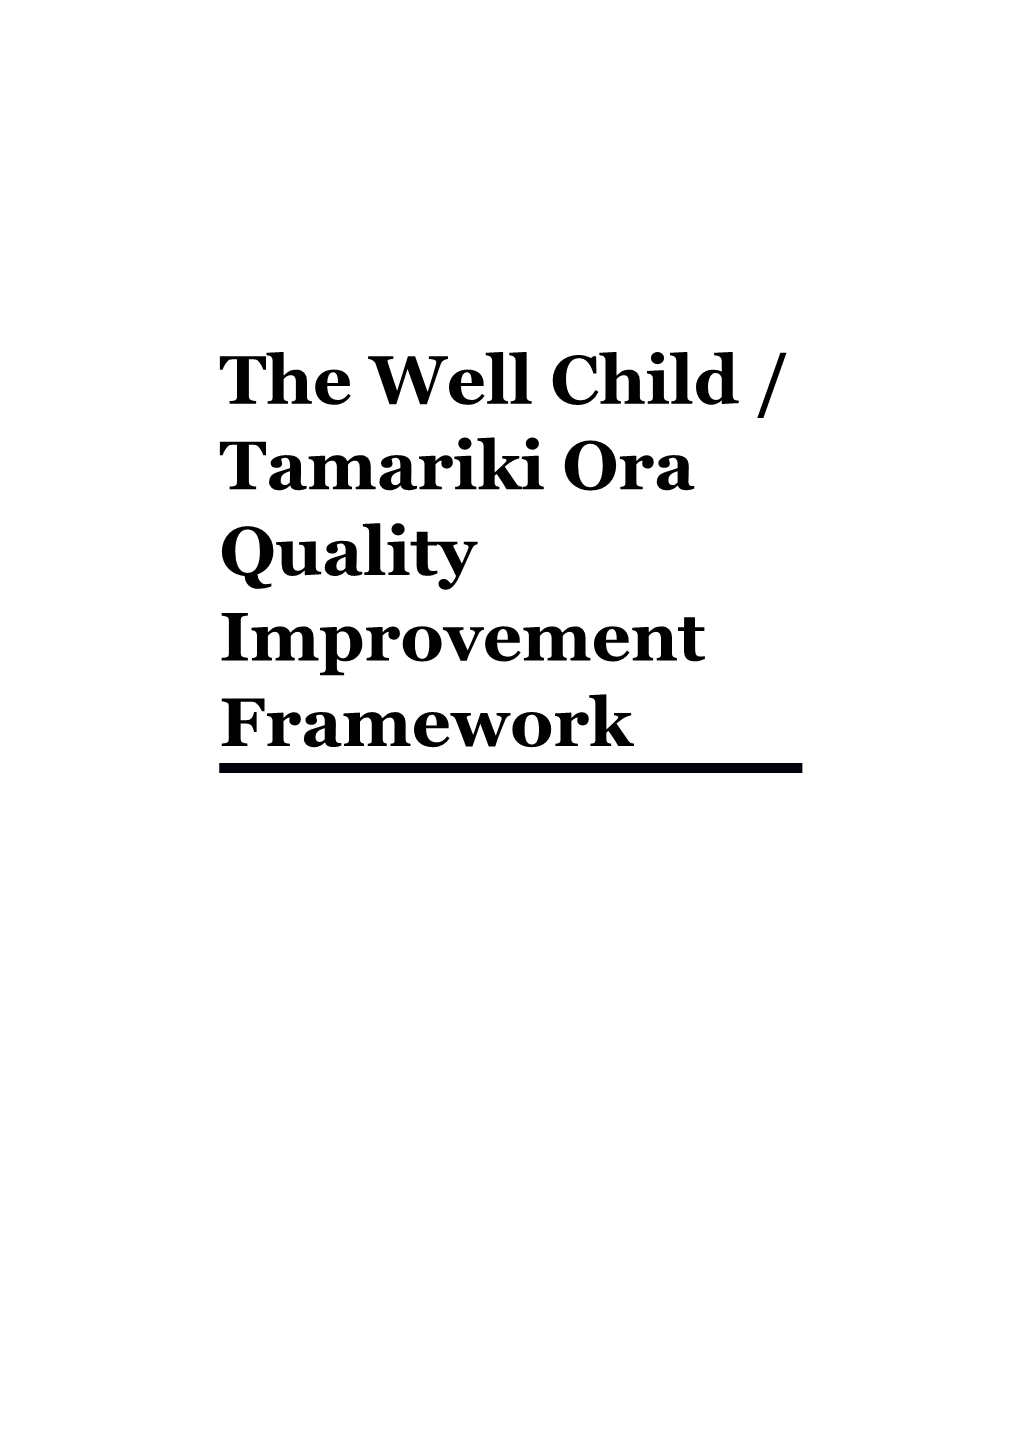 The Well Child/ Tamariki Ora Quality Improvement Framework